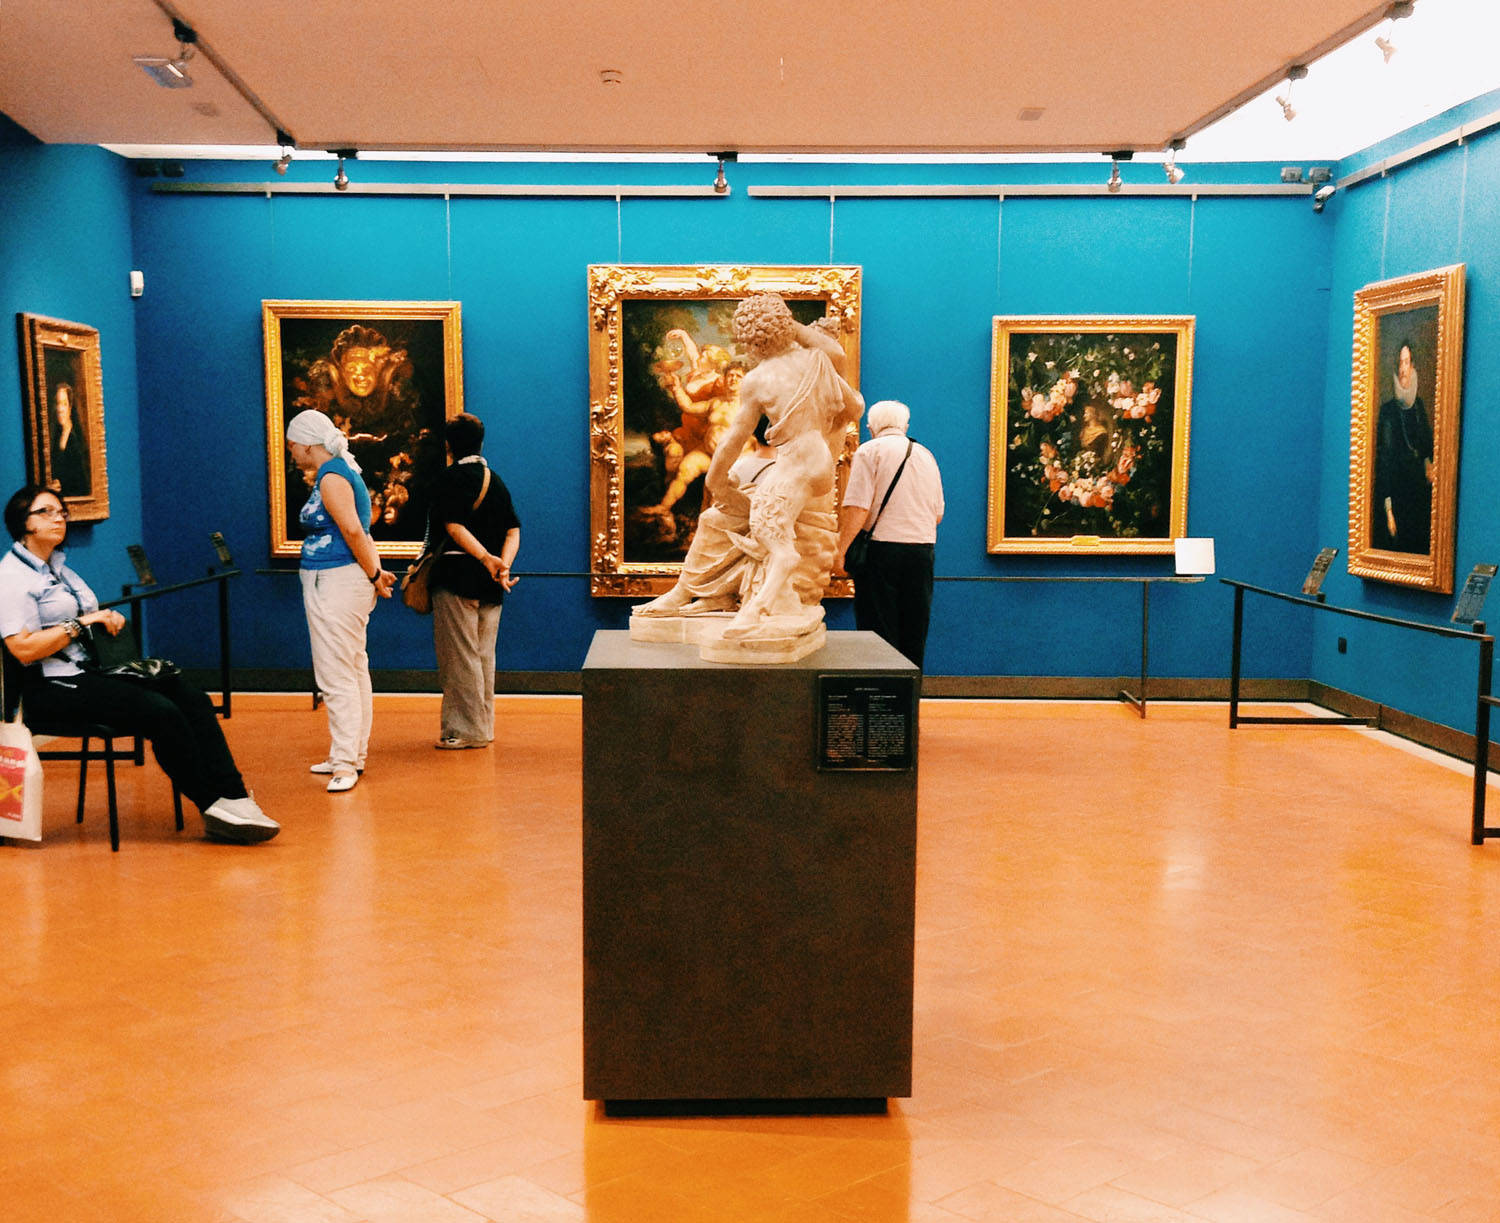 Blue Room At Uffizi Gallery Background